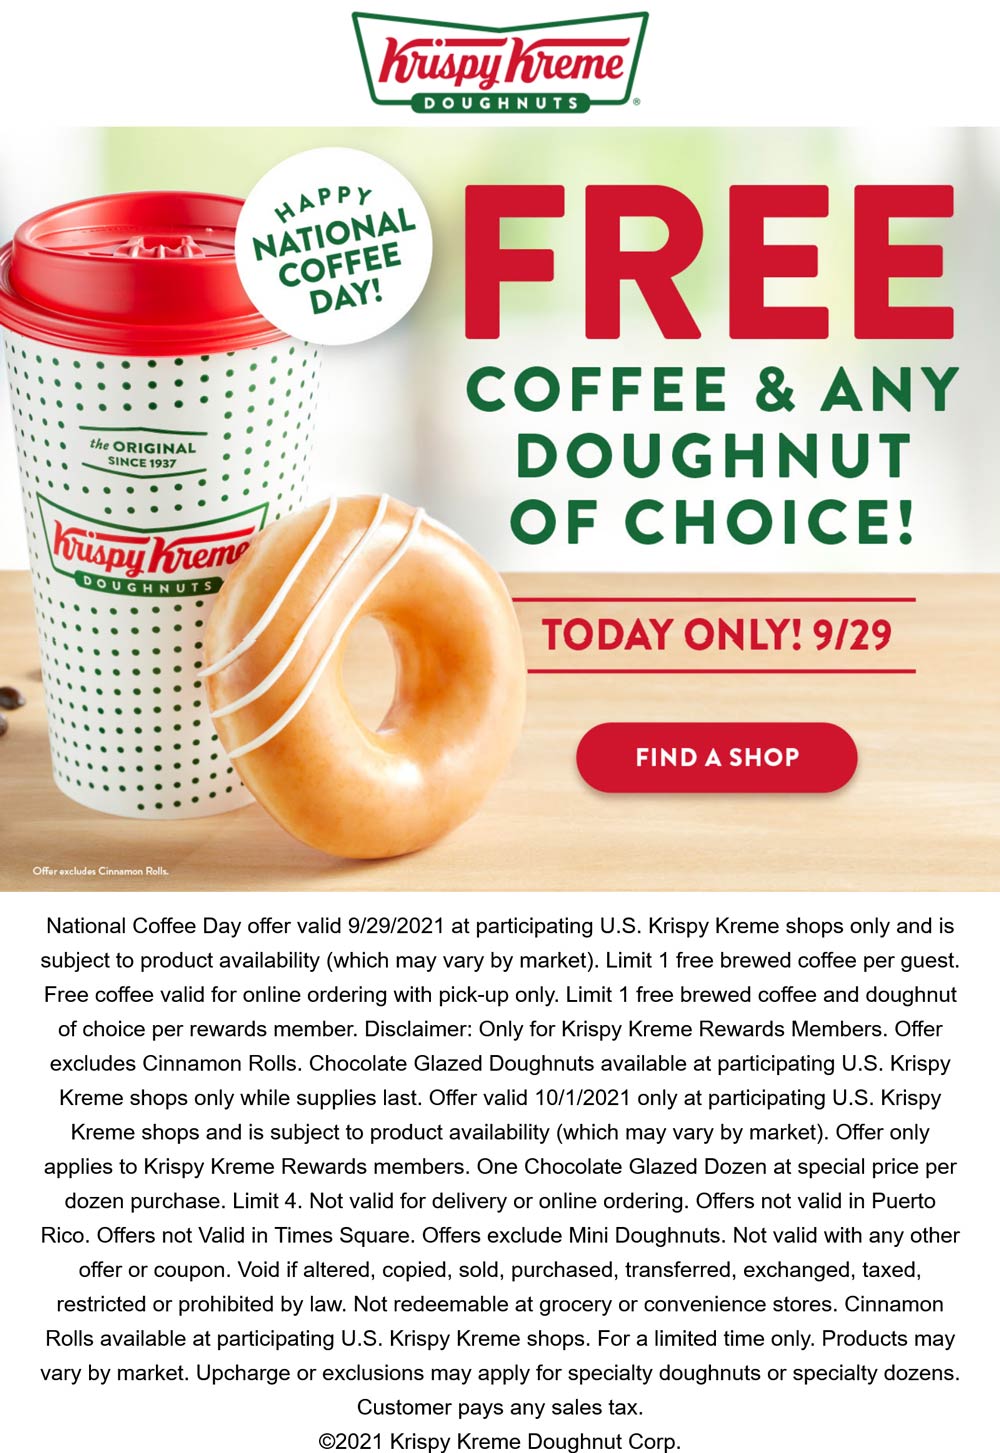 Krispy Kreme restaurants Coupon  Free doughnut + coffee today at Krispy Kreme donuts #krispykreme 